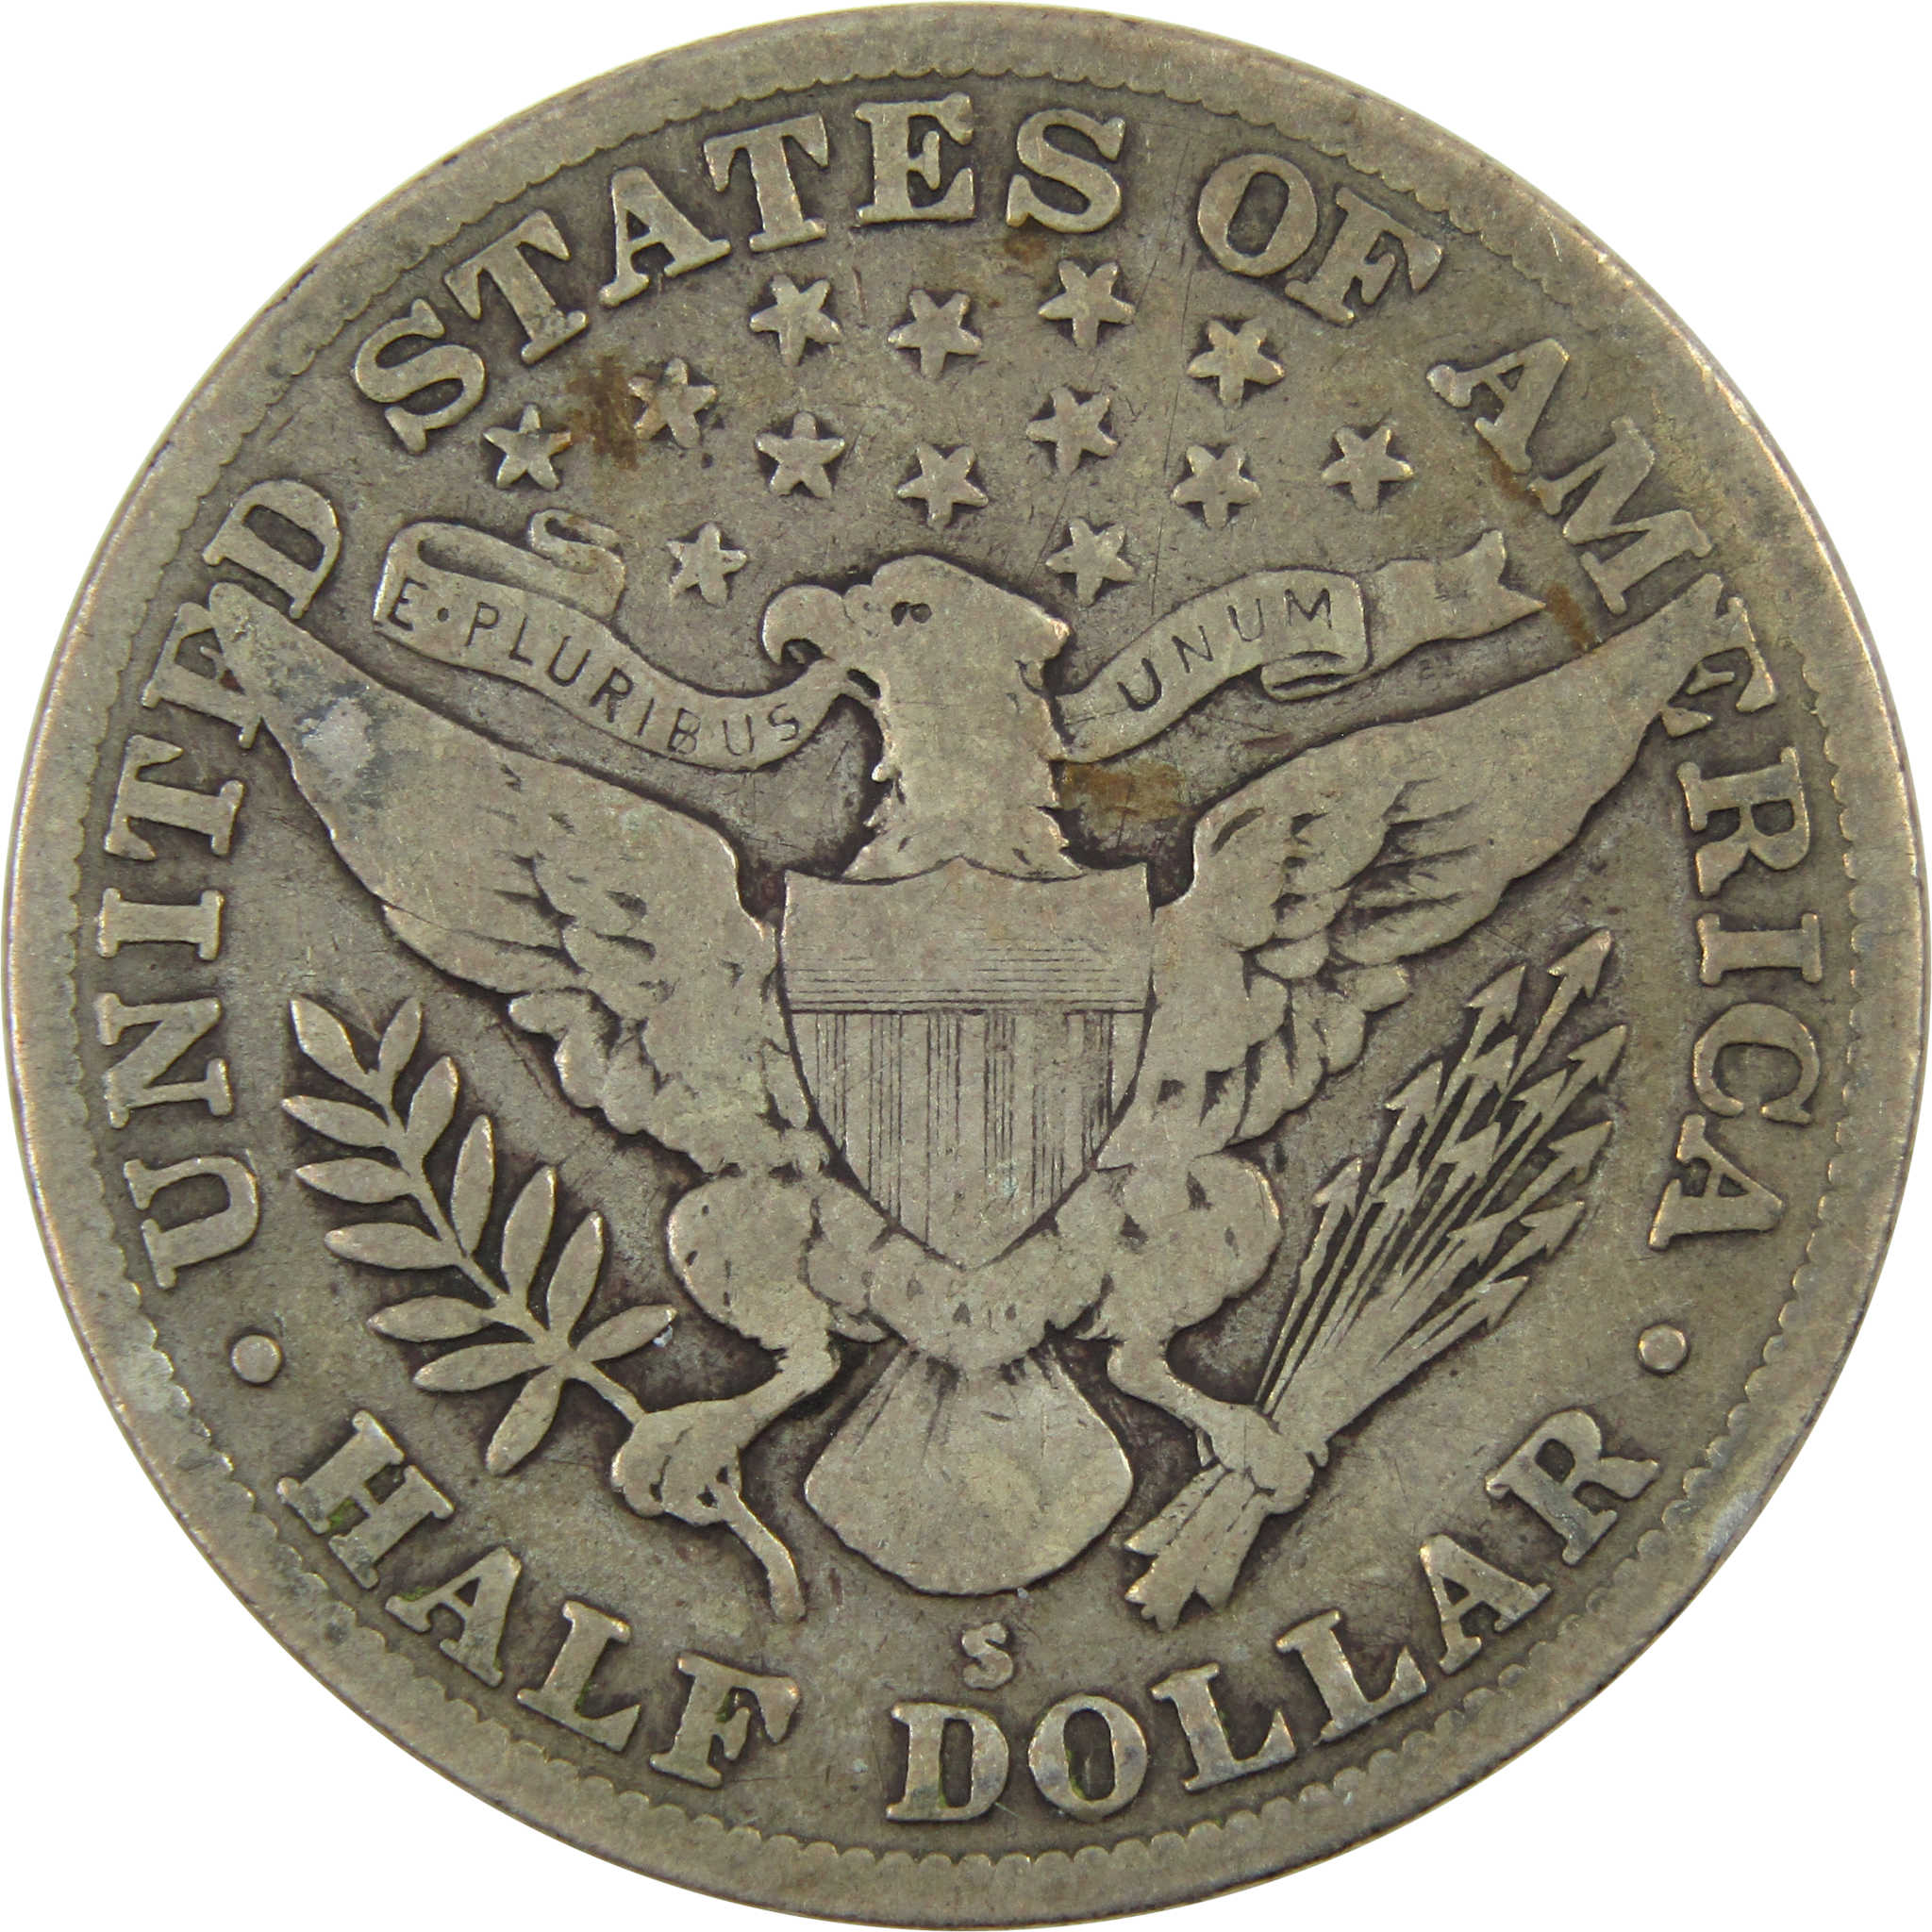 1915 S Barber Half Dollar VG Very Good Silver 50c Coin SKU:I12487